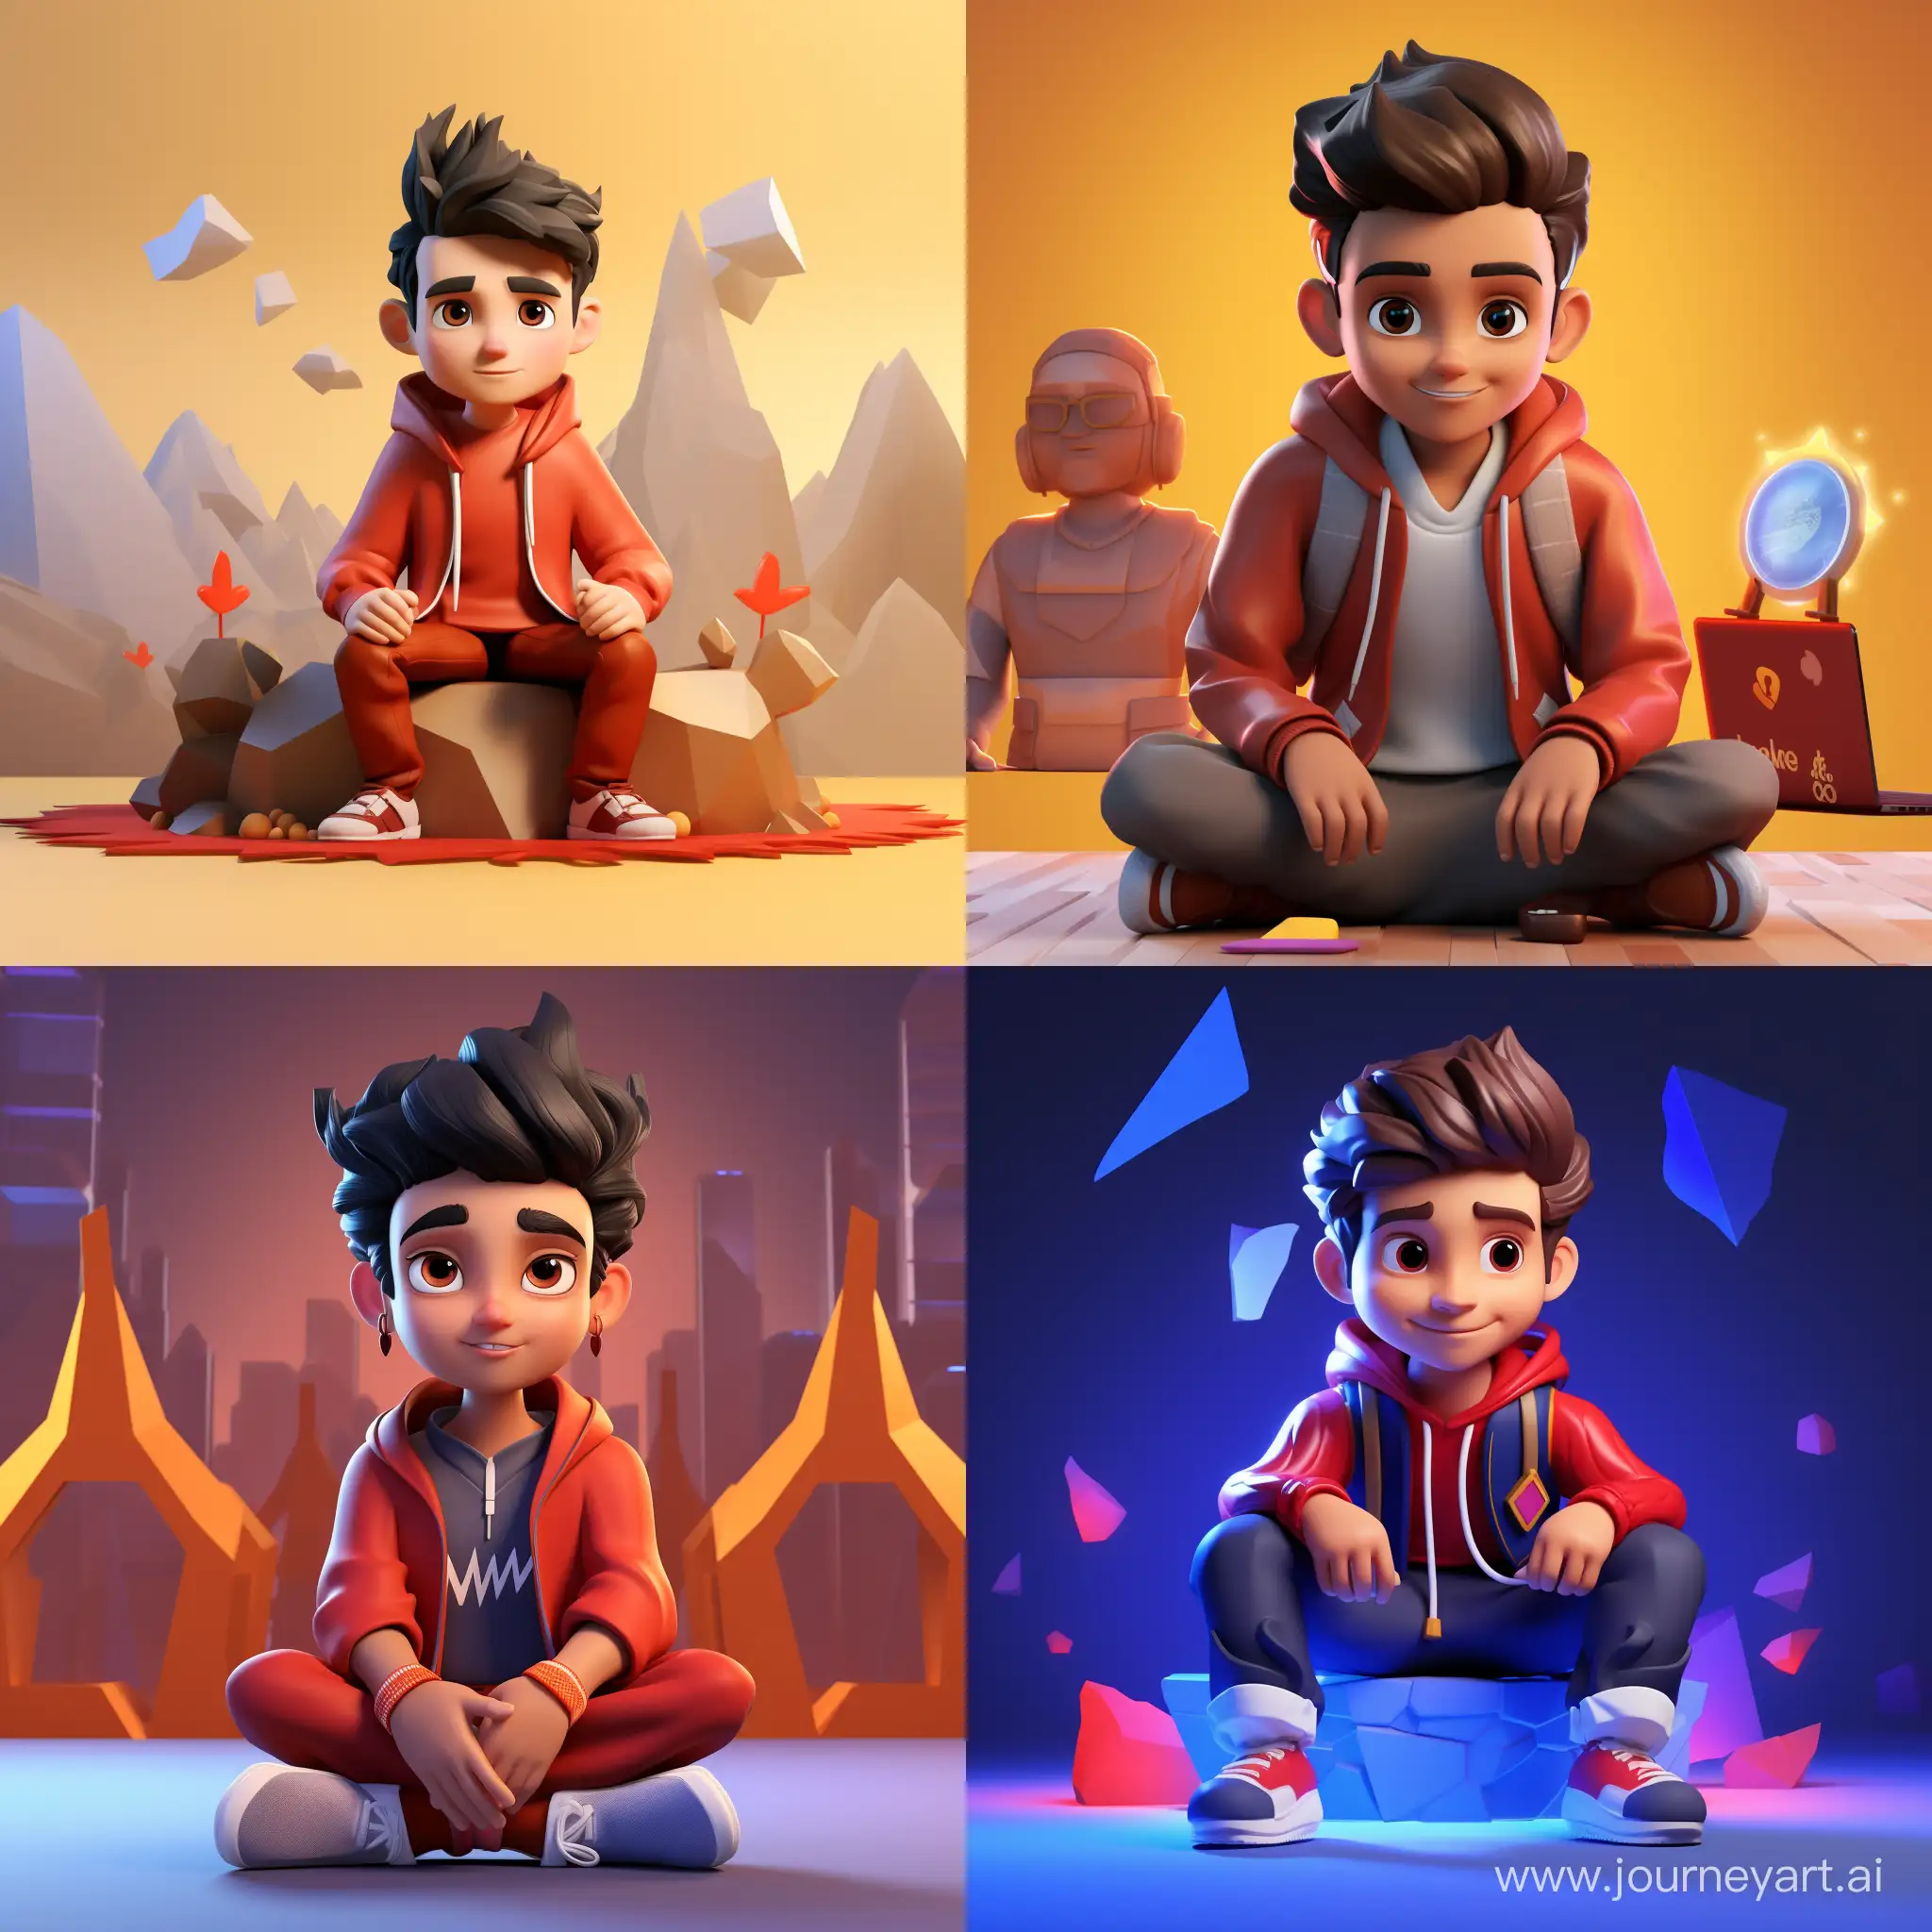 Modern-Indian-Boy-Sitting-on-YouTube-Logo-in-Smart-Graphics-Profile-Mockup